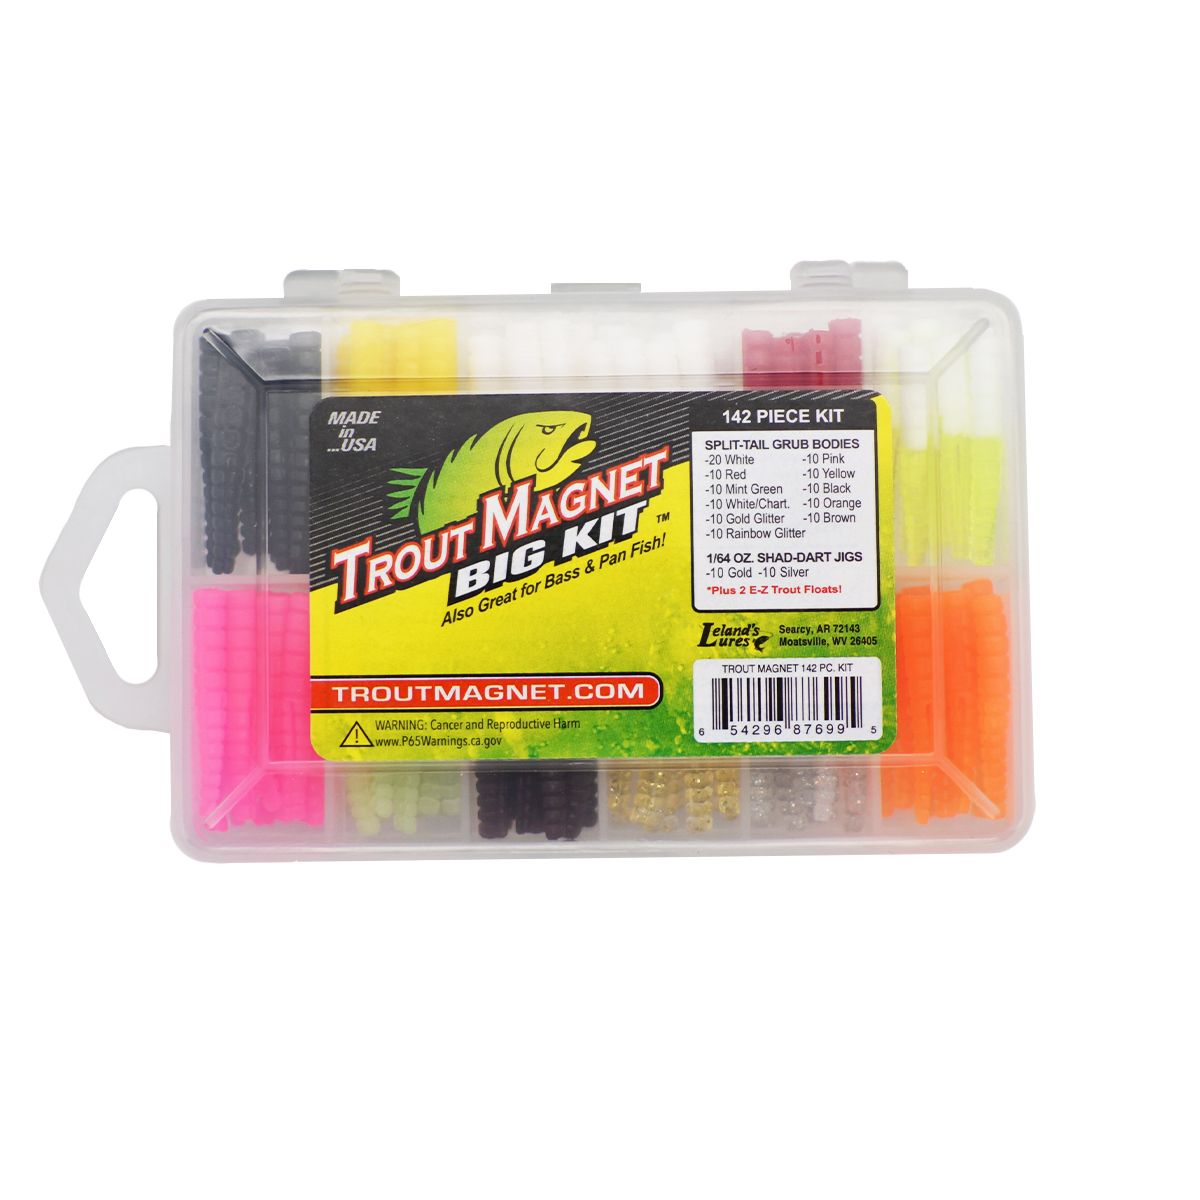 Leland Trout Magnet Kit & Grubs Shad Darts(The Original)-142 Piece Mad